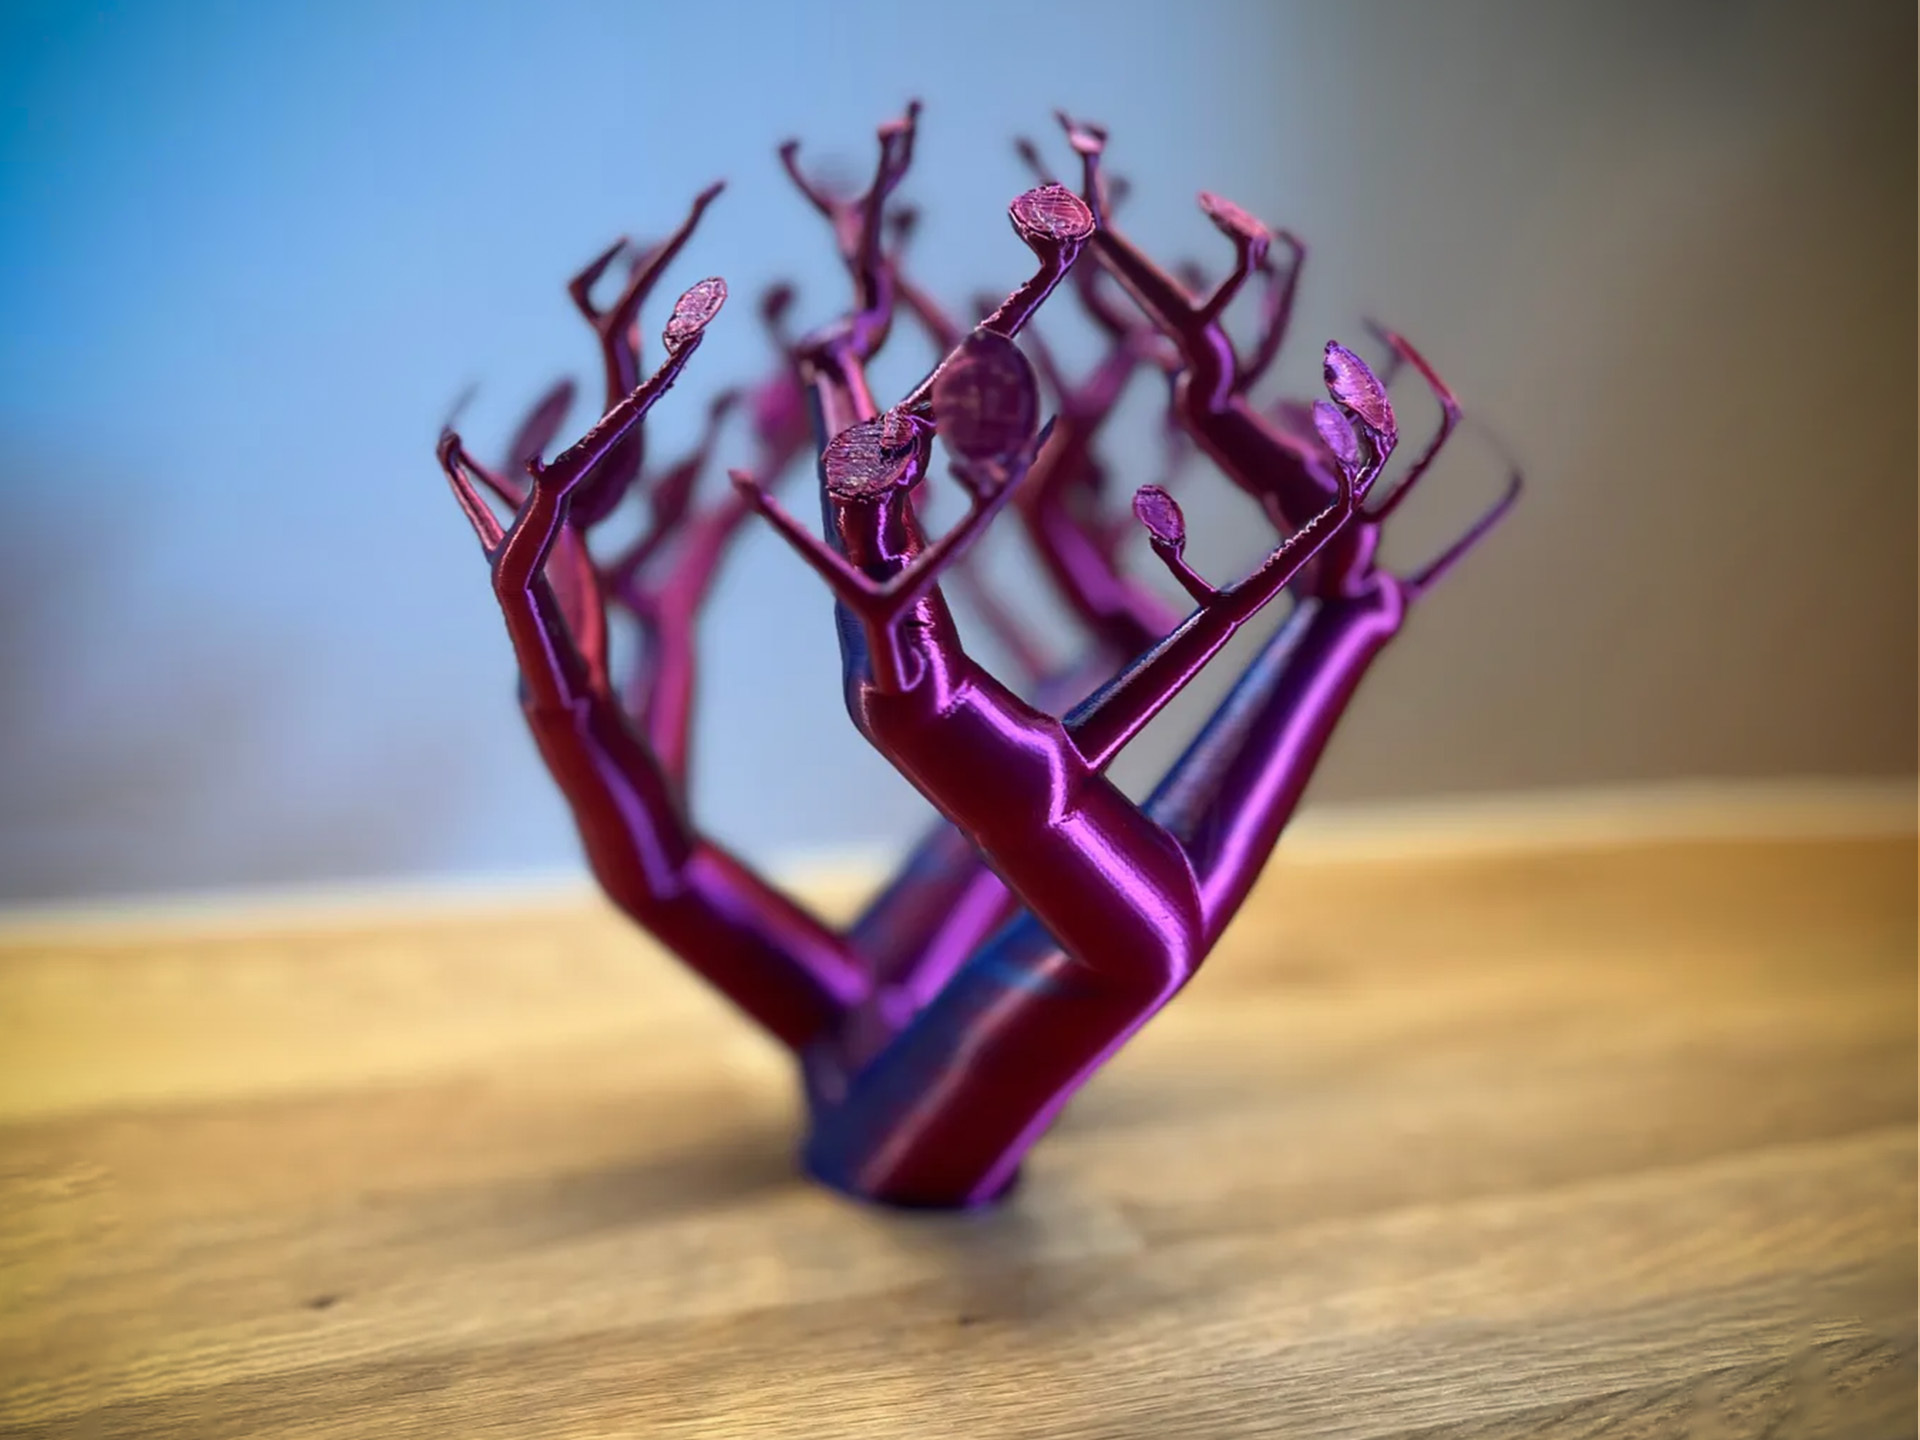 Organic Support Tree - model par Cqeye, photo et impression par netsrot